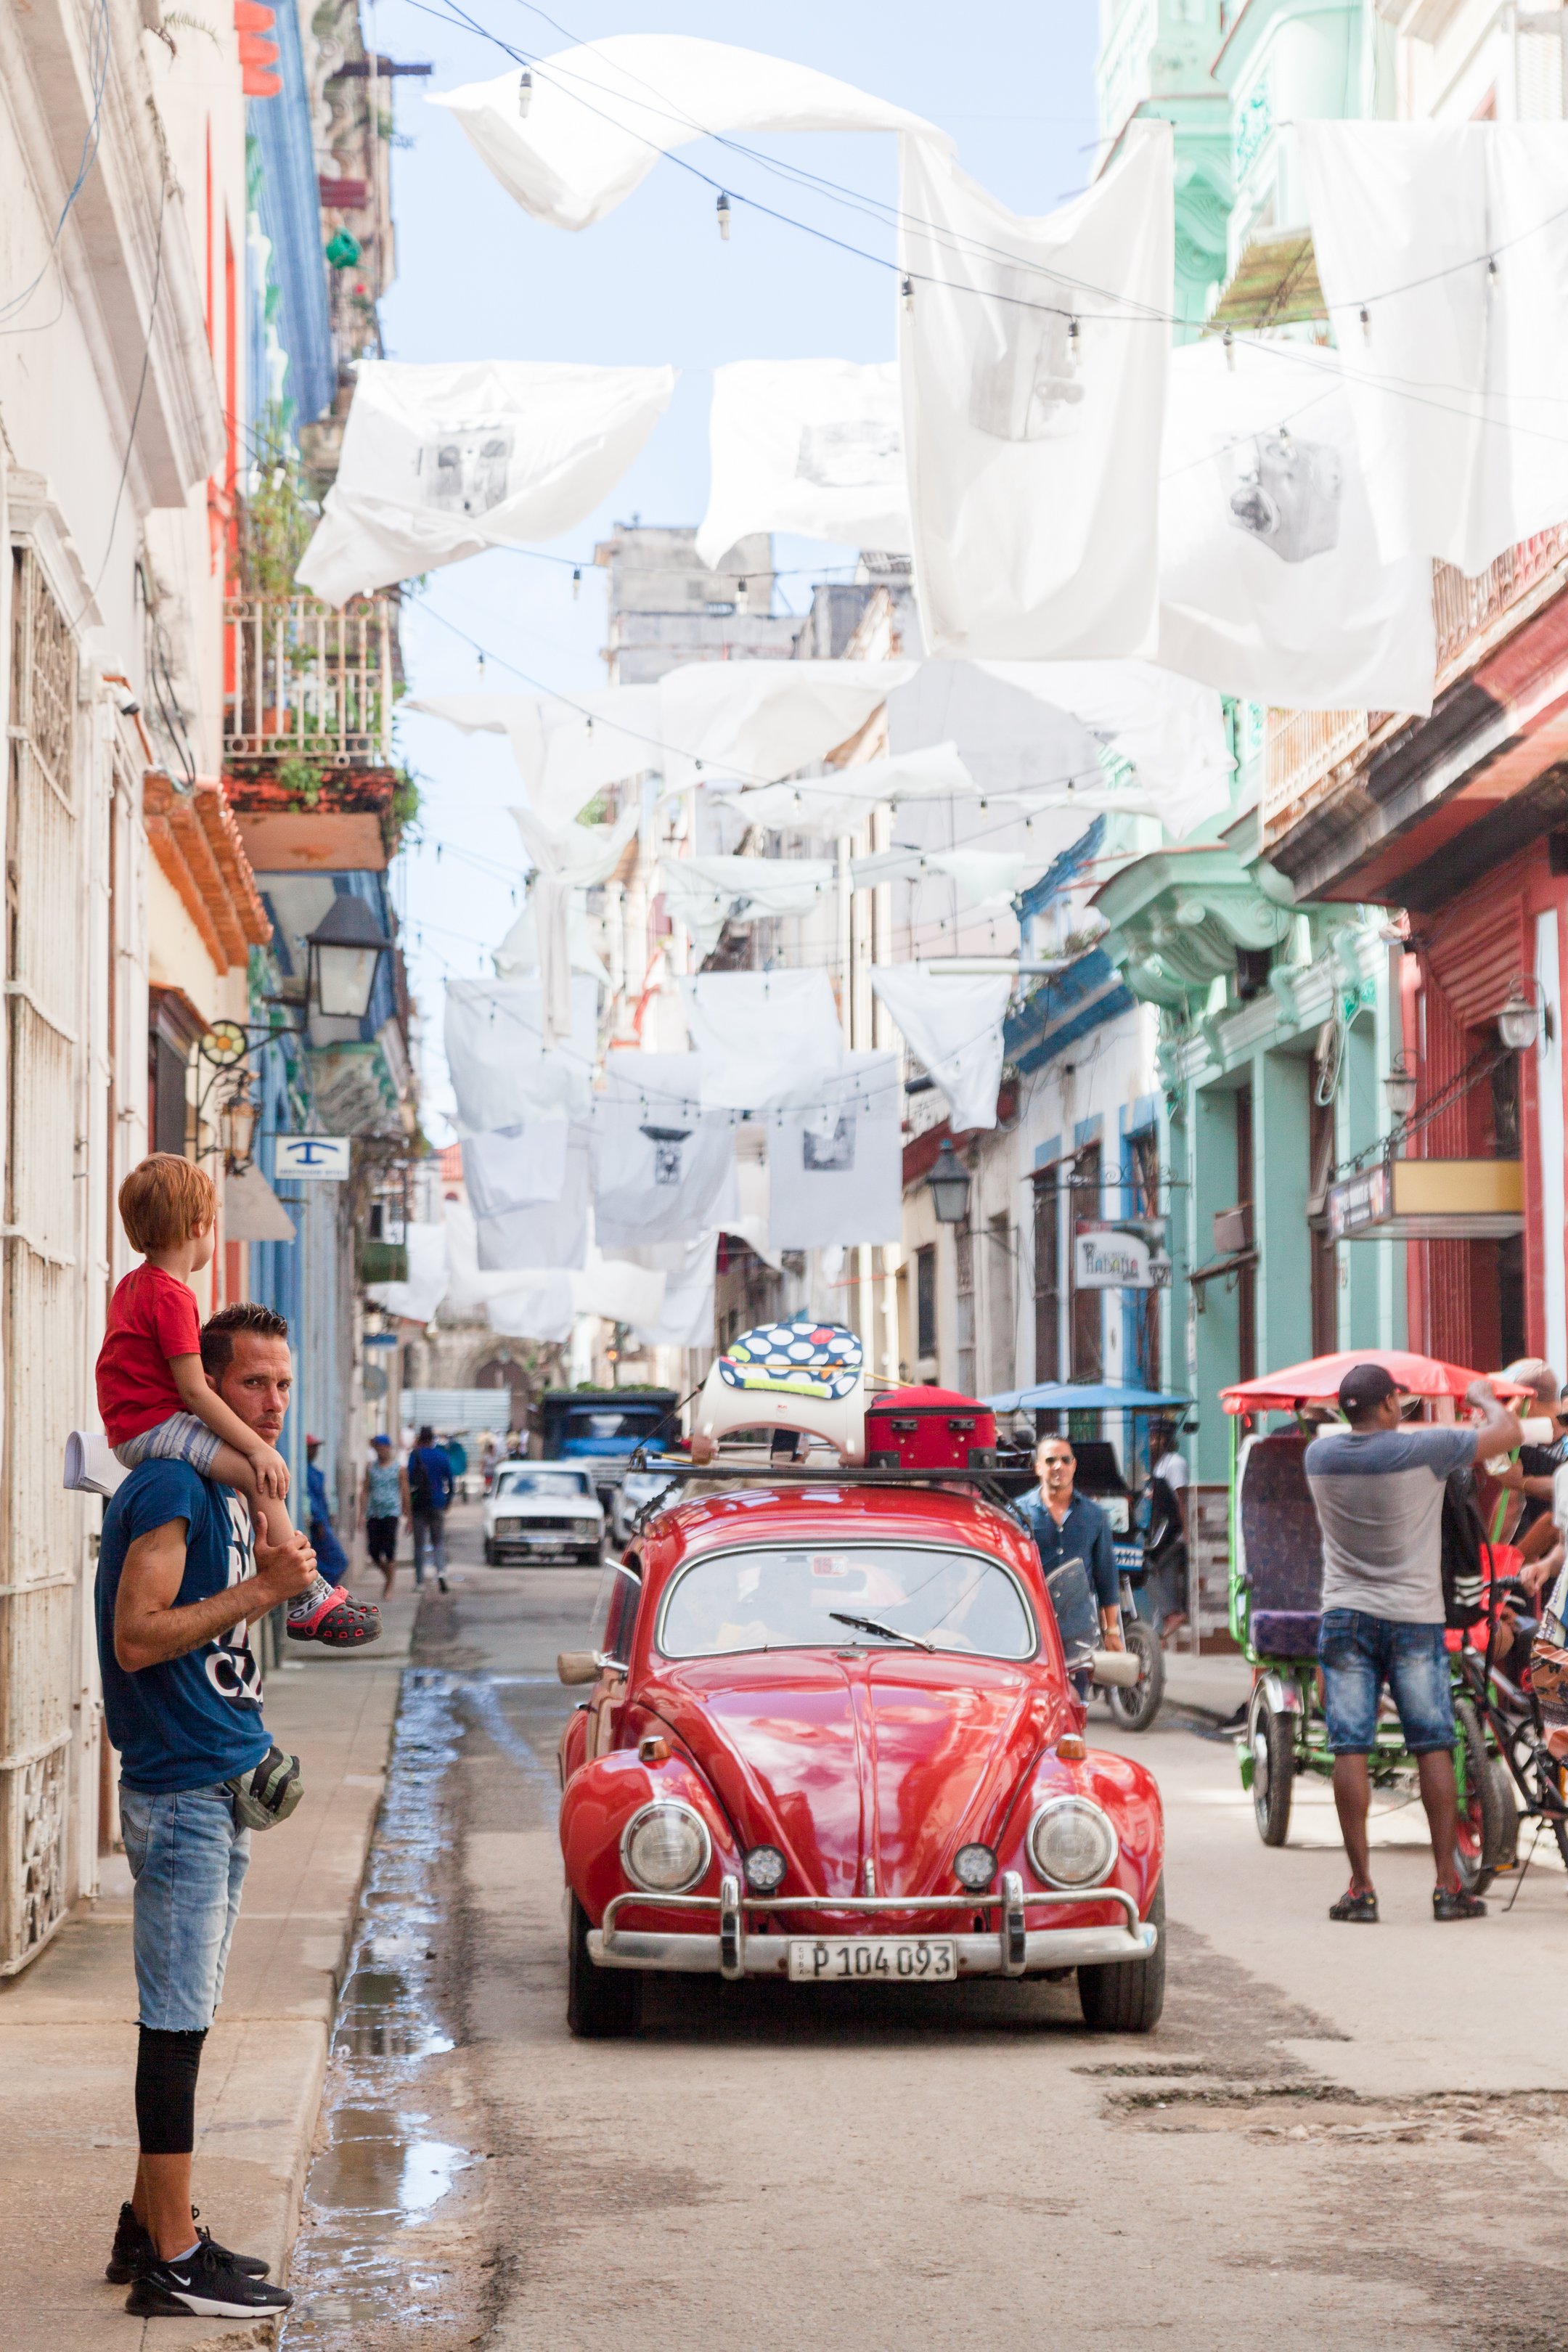  Red dream, Havanna, Cuba 2019 © Laura Elo 